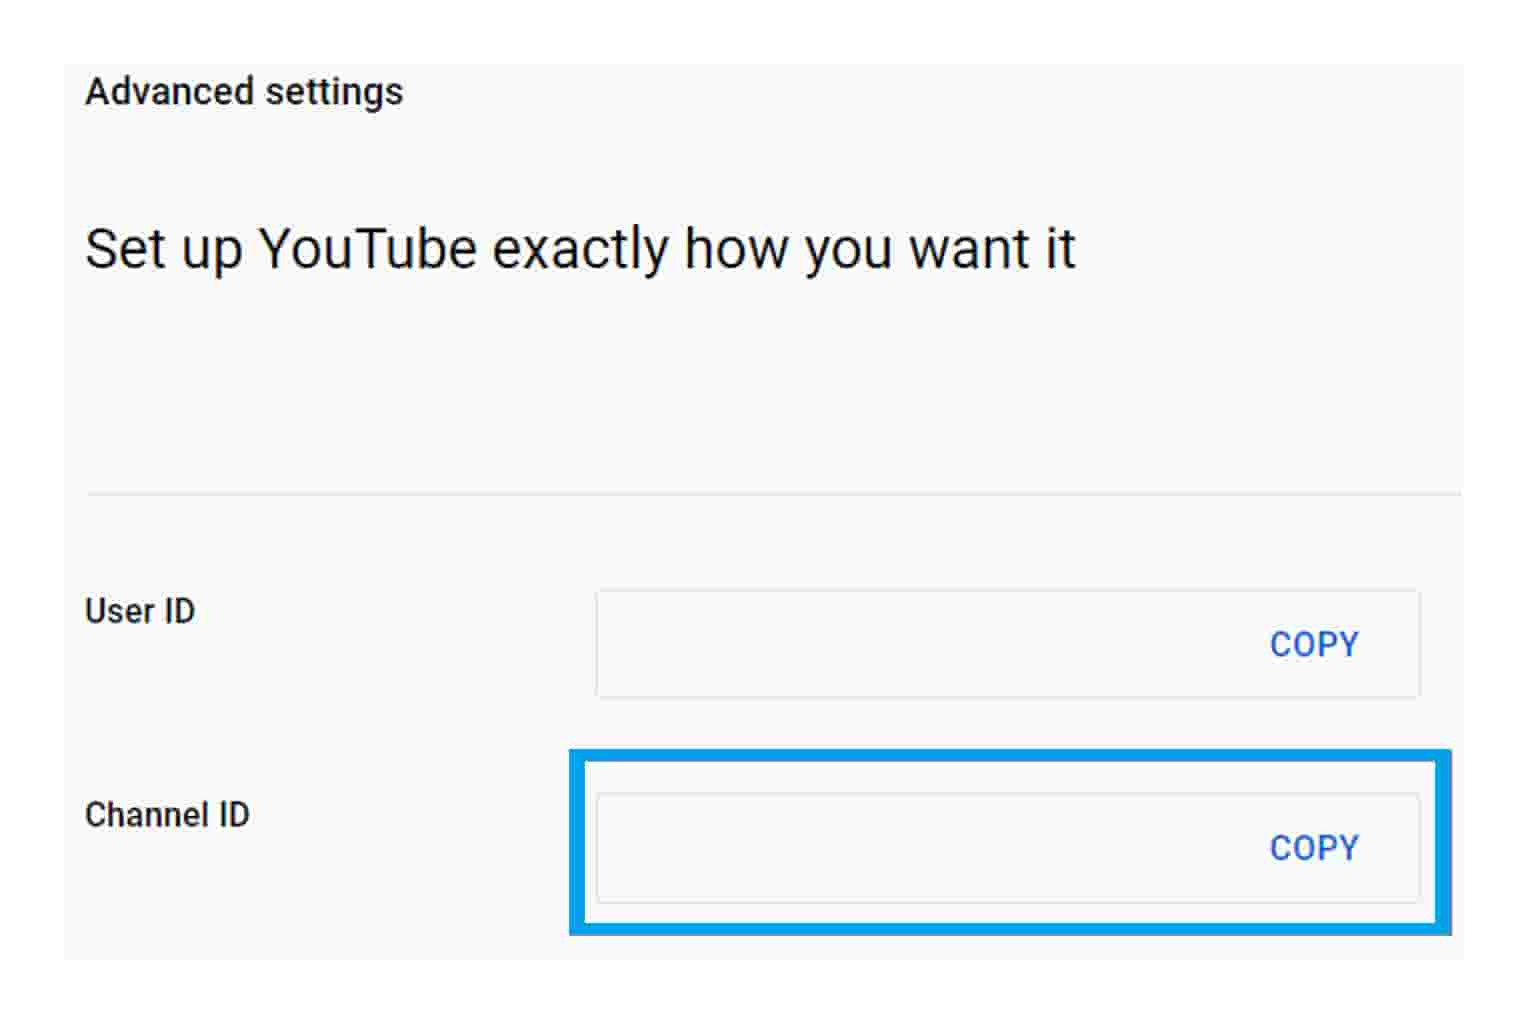 YouTube channel verification process